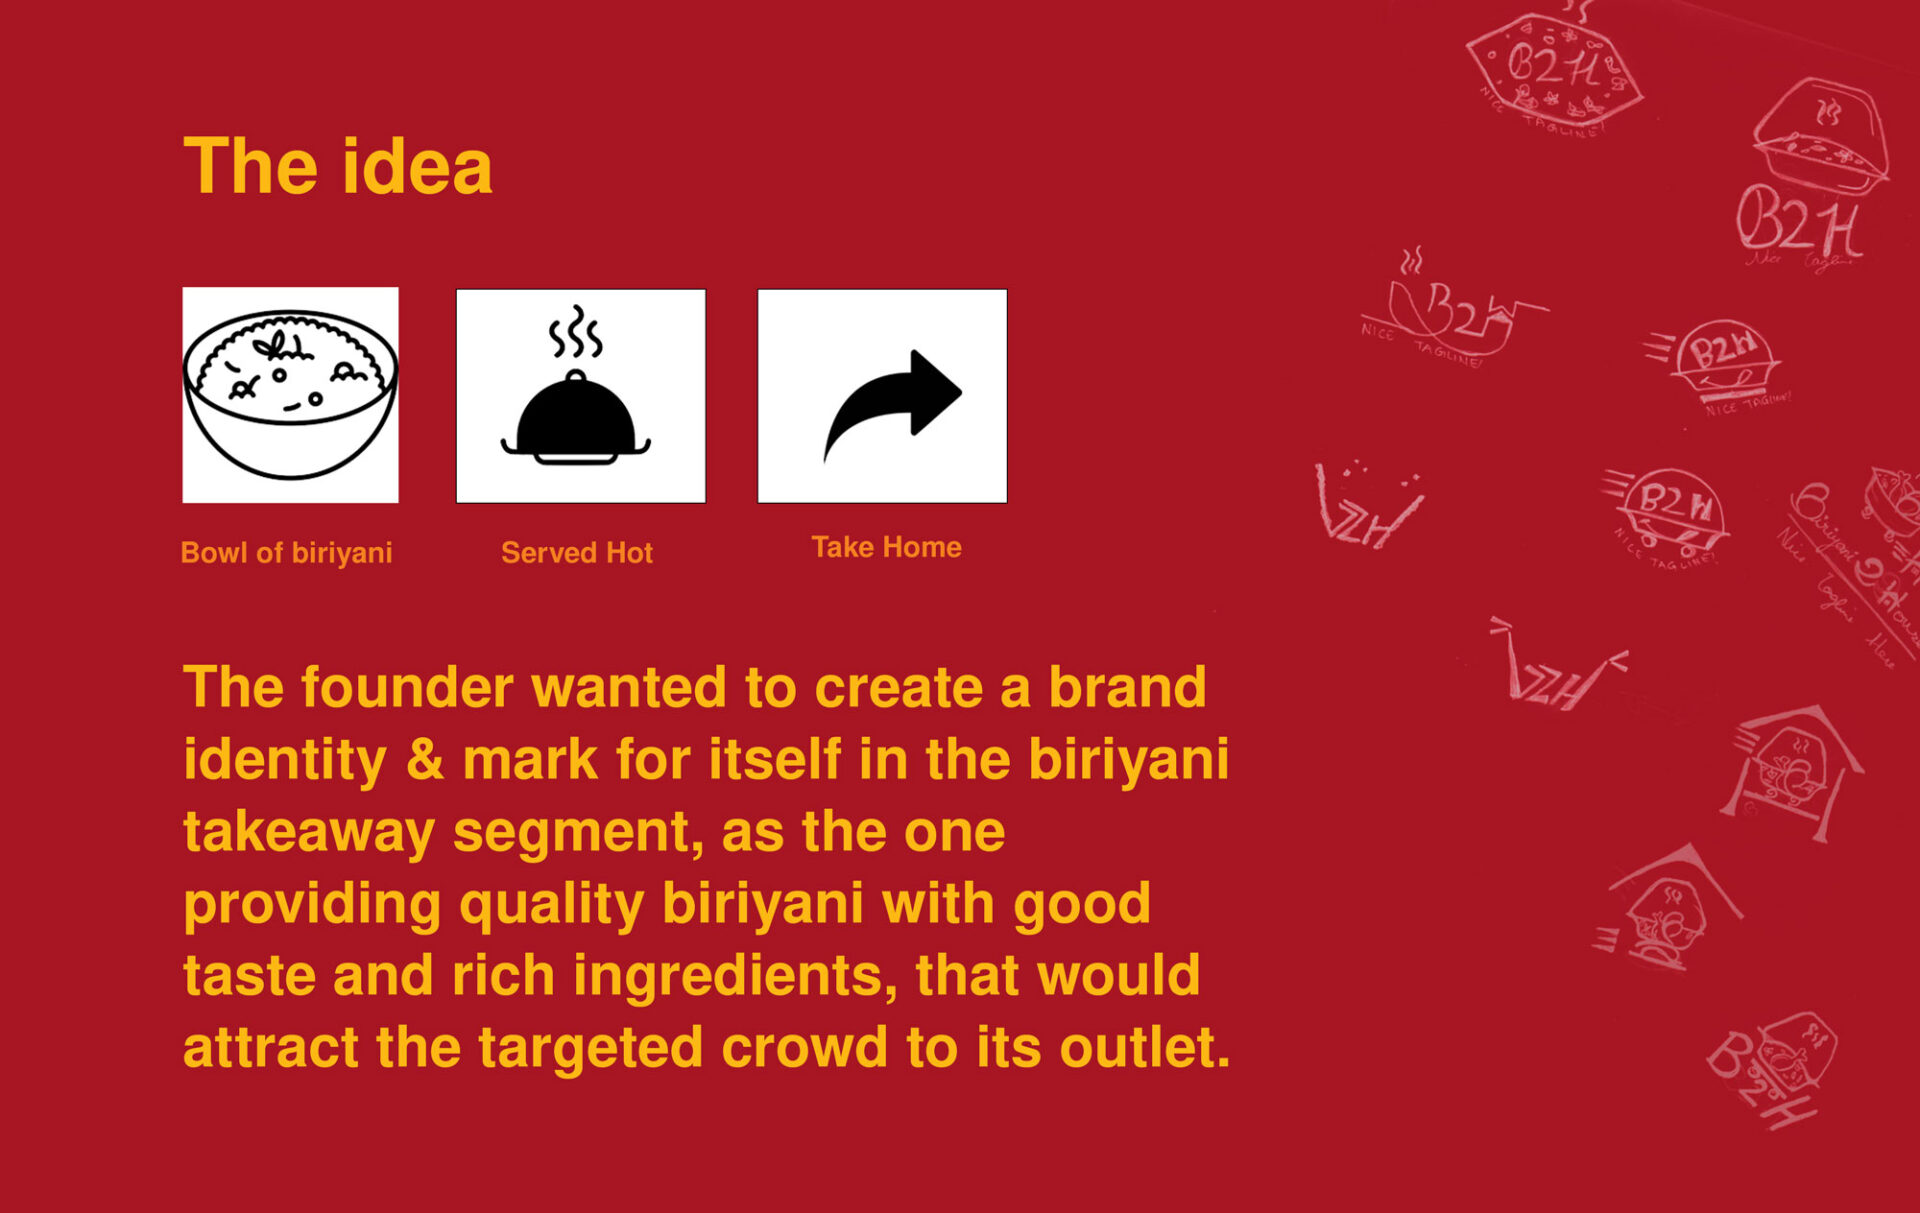 b2h-biriyani2home-restaurant-takeaway-biriyani-outlet-branding-brand-identity-design-consulting-services-agency-reinaphics-creatives-chennai-india